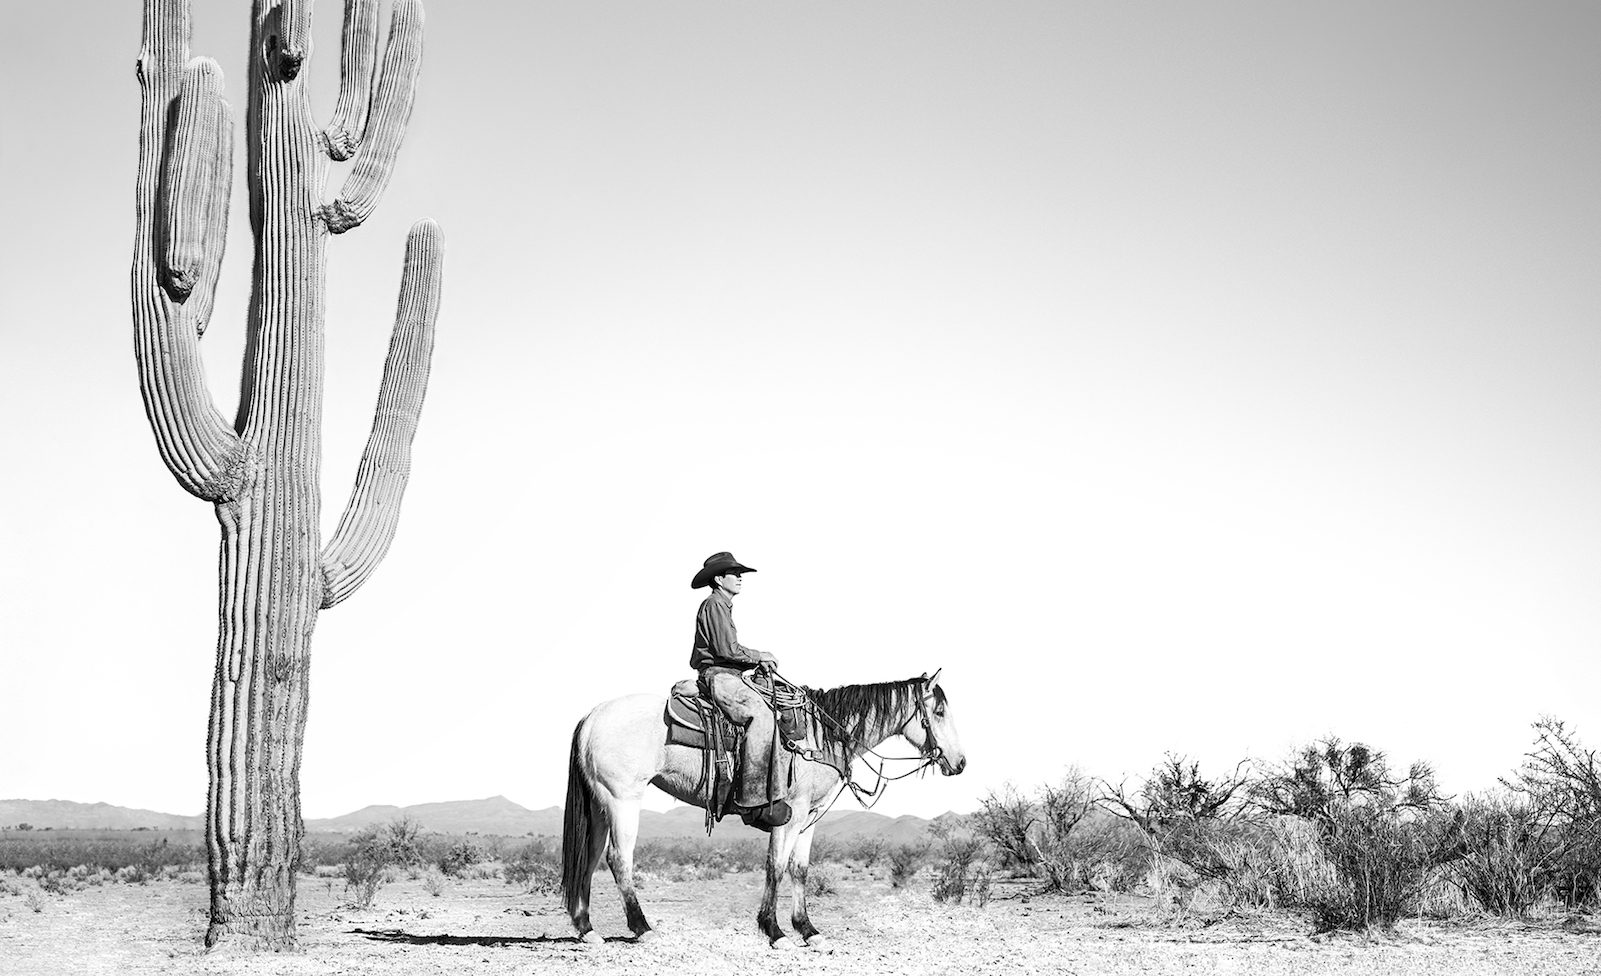 A photographer’s ode to America’s legendary cowboy culture